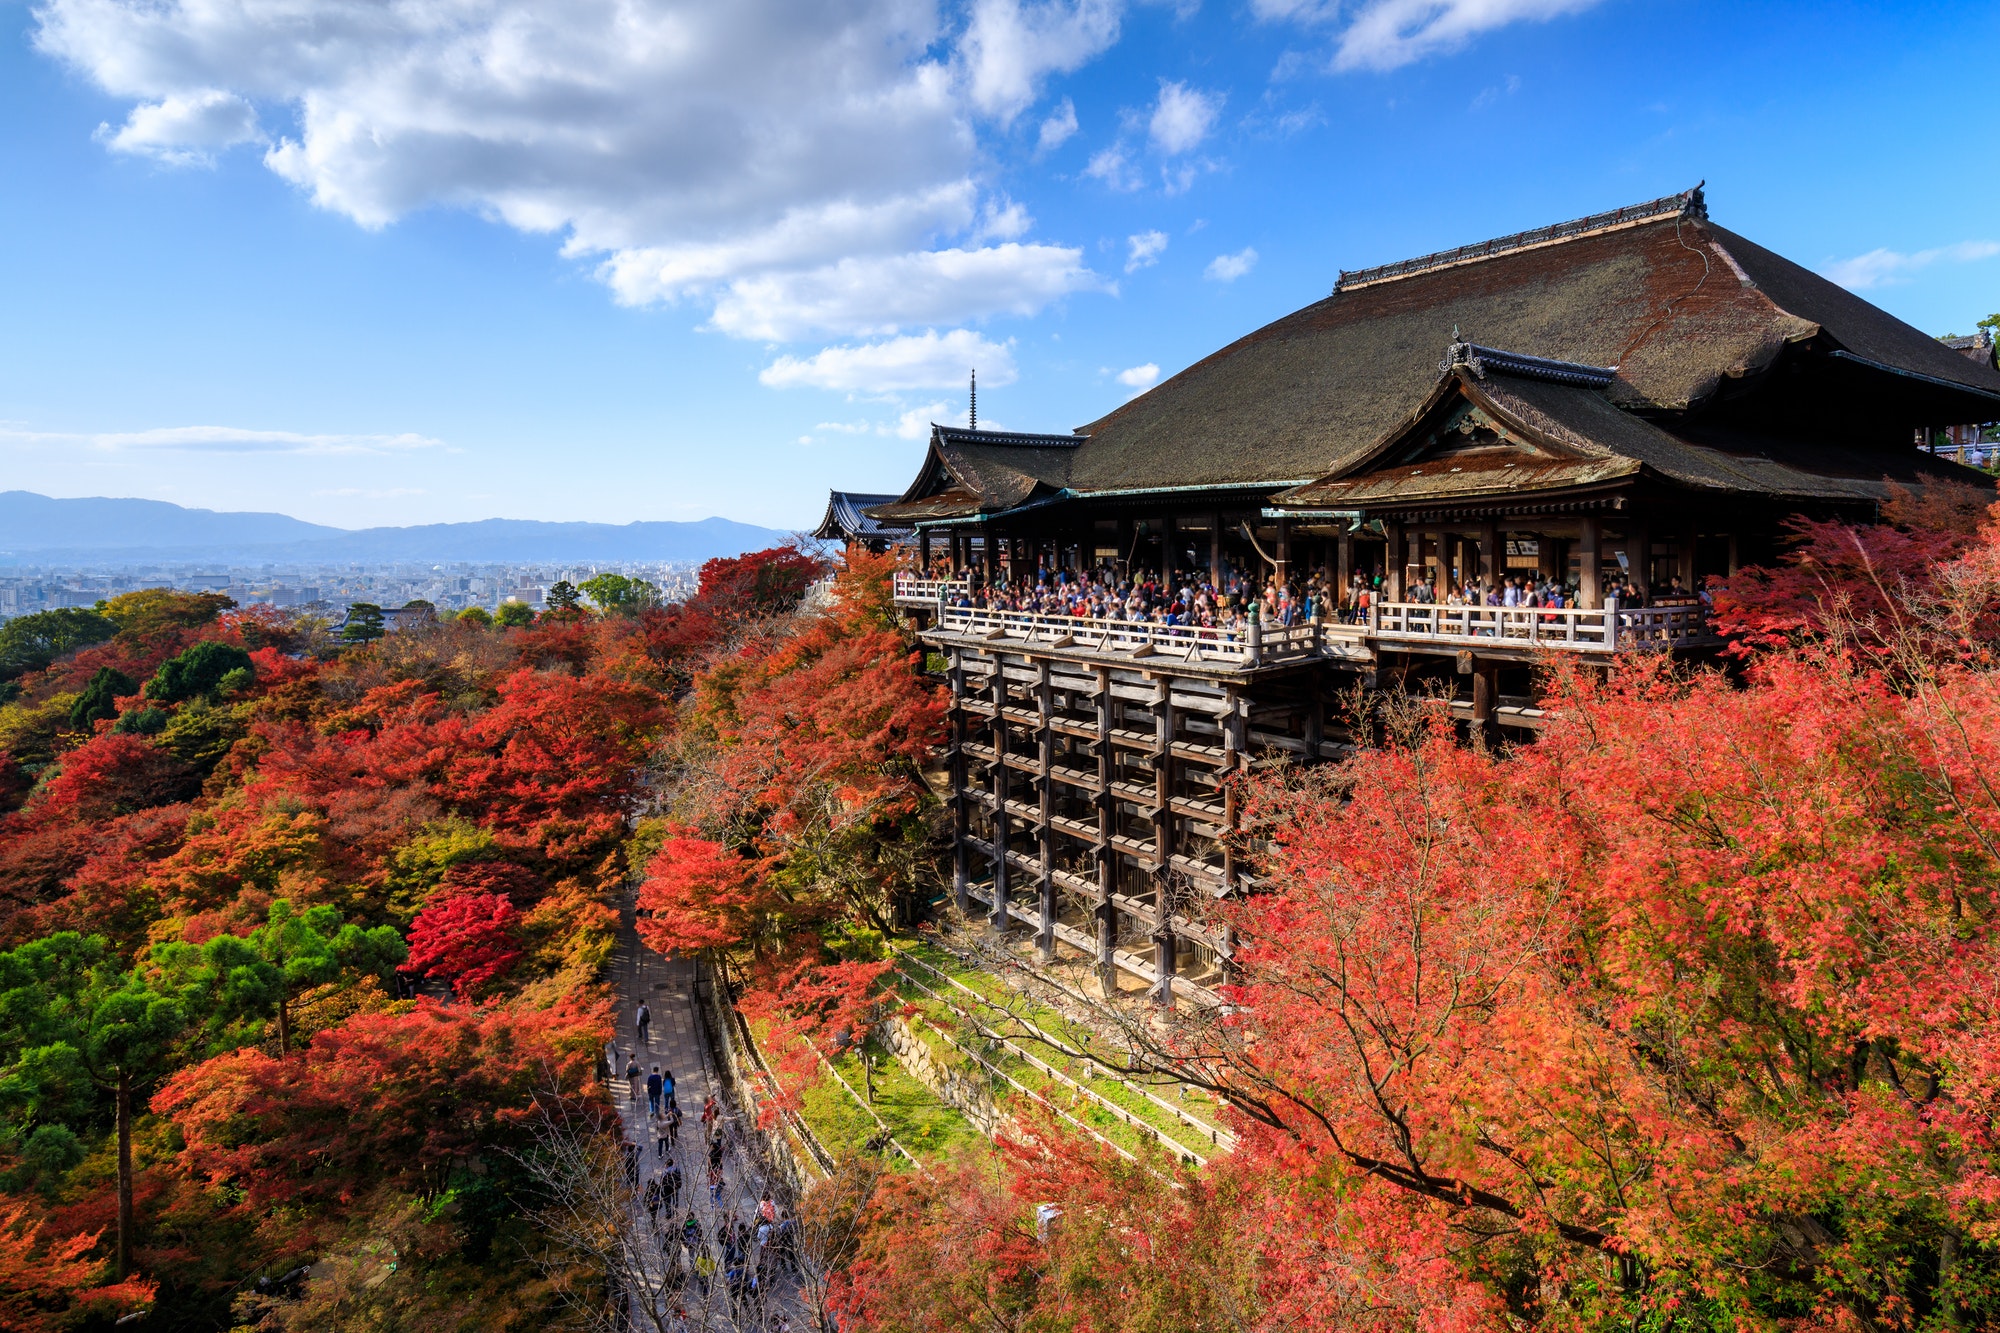 Kiyomizu dera temple in autumn, Kyoto, Japan